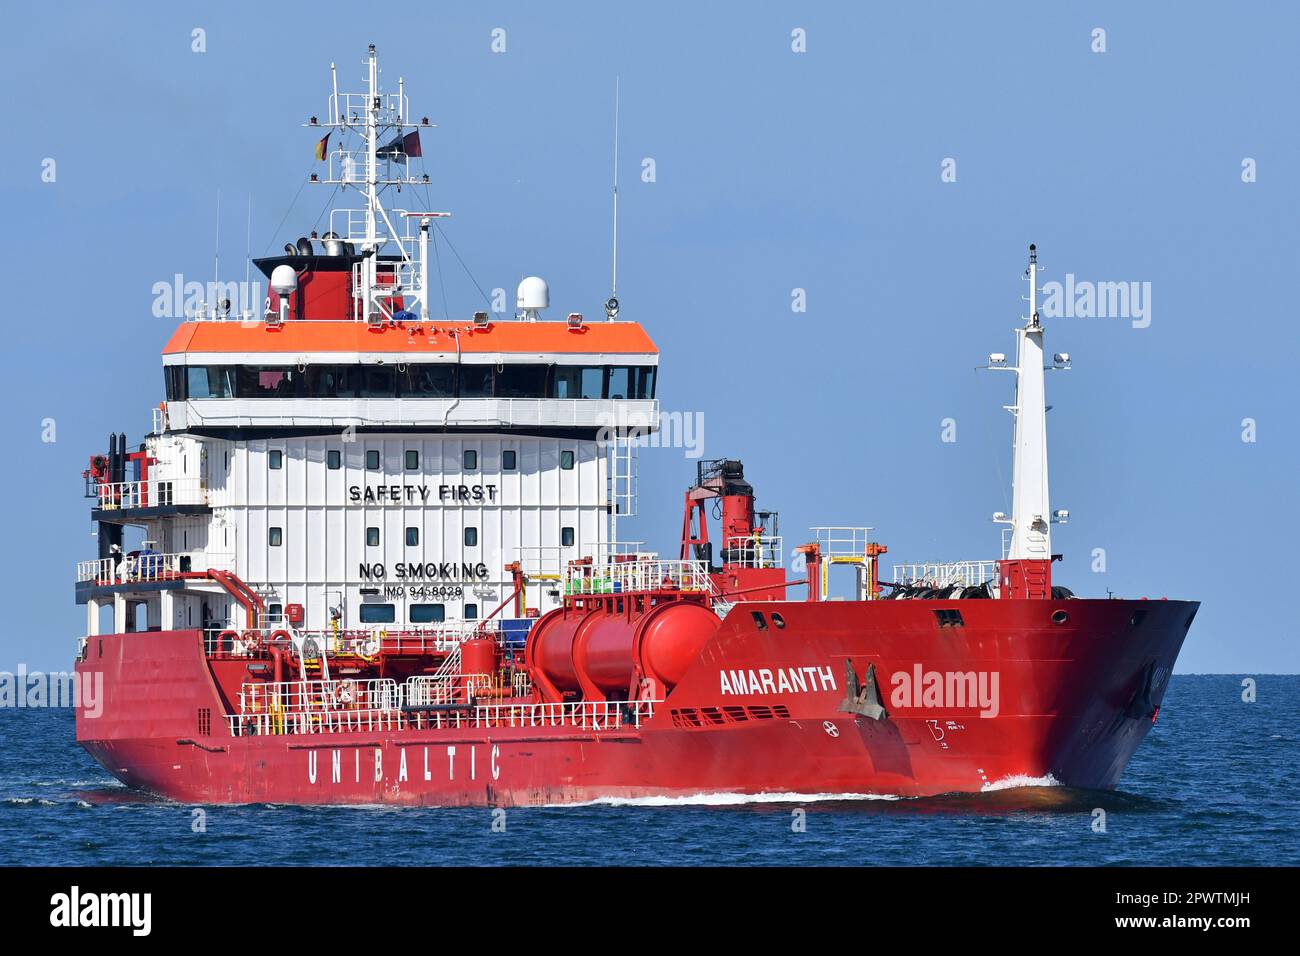 Unibaltic's Tanker AMARANTH at the Kiel Fjord Stock Photo